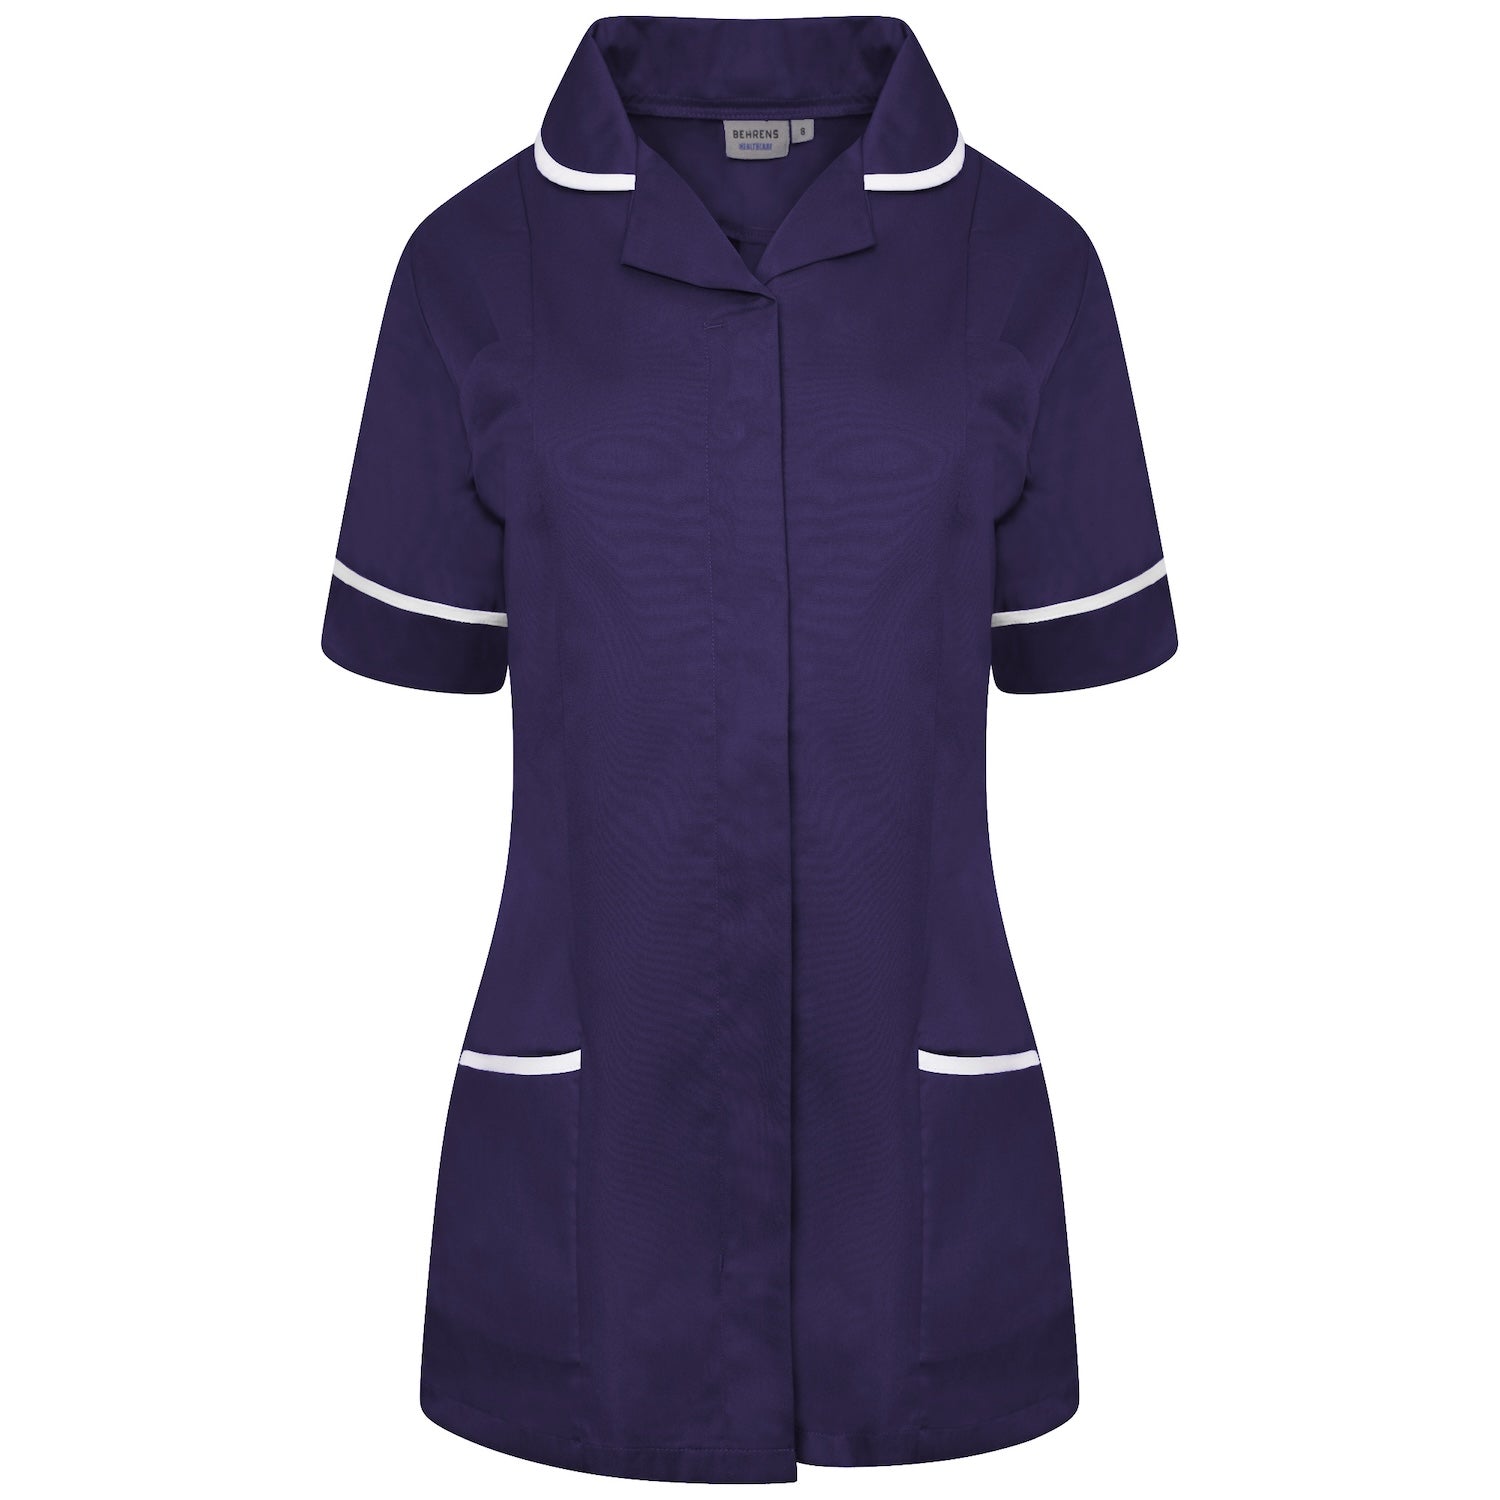 Ladies Healthcare Tunic | Round Collar | Navy/White Trim